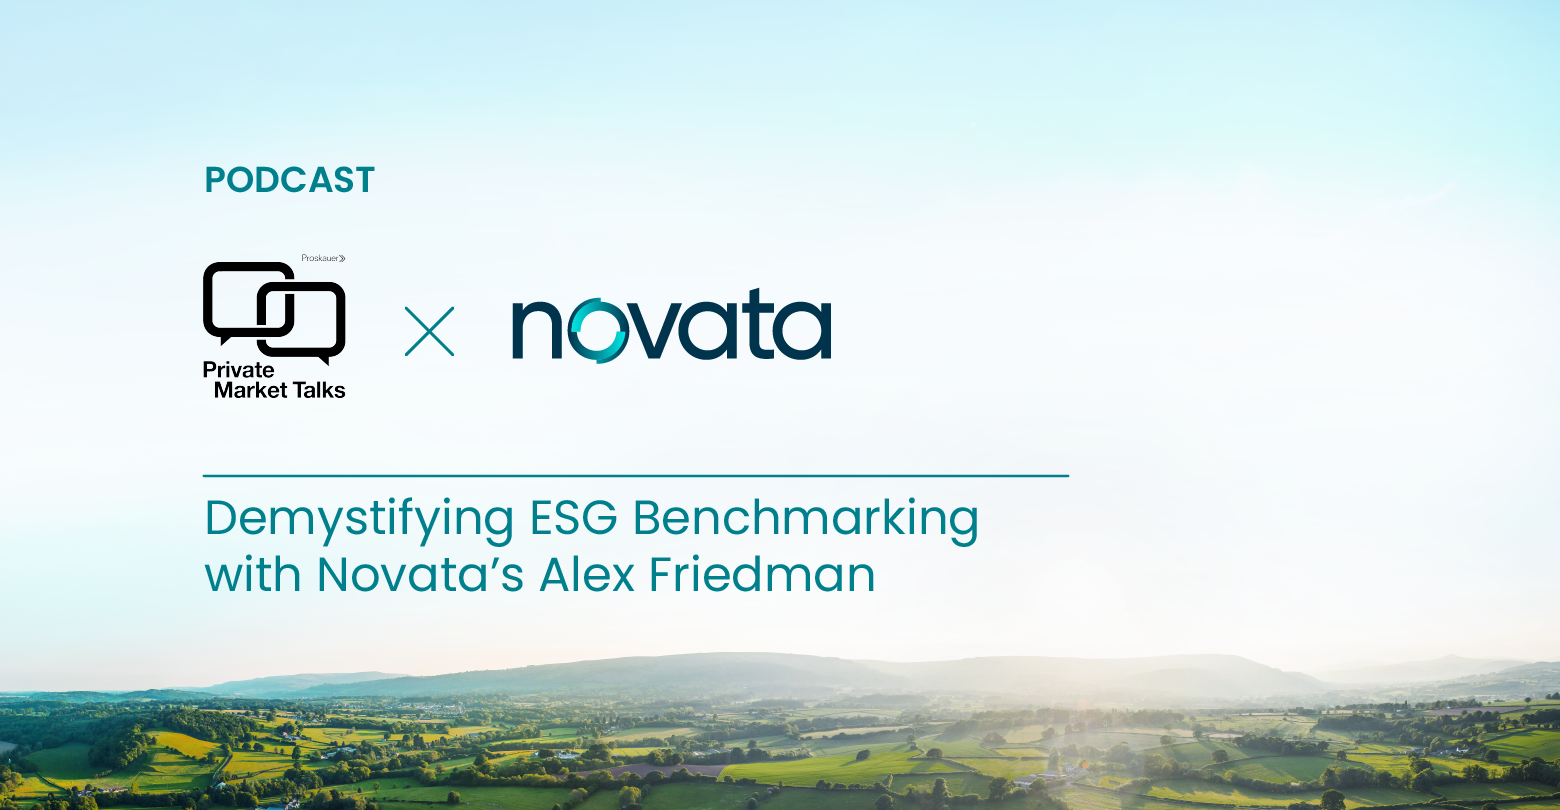 Private Market Talks and Novata: Demystifying ESG Benchmarking with Novata's Alex Friedman